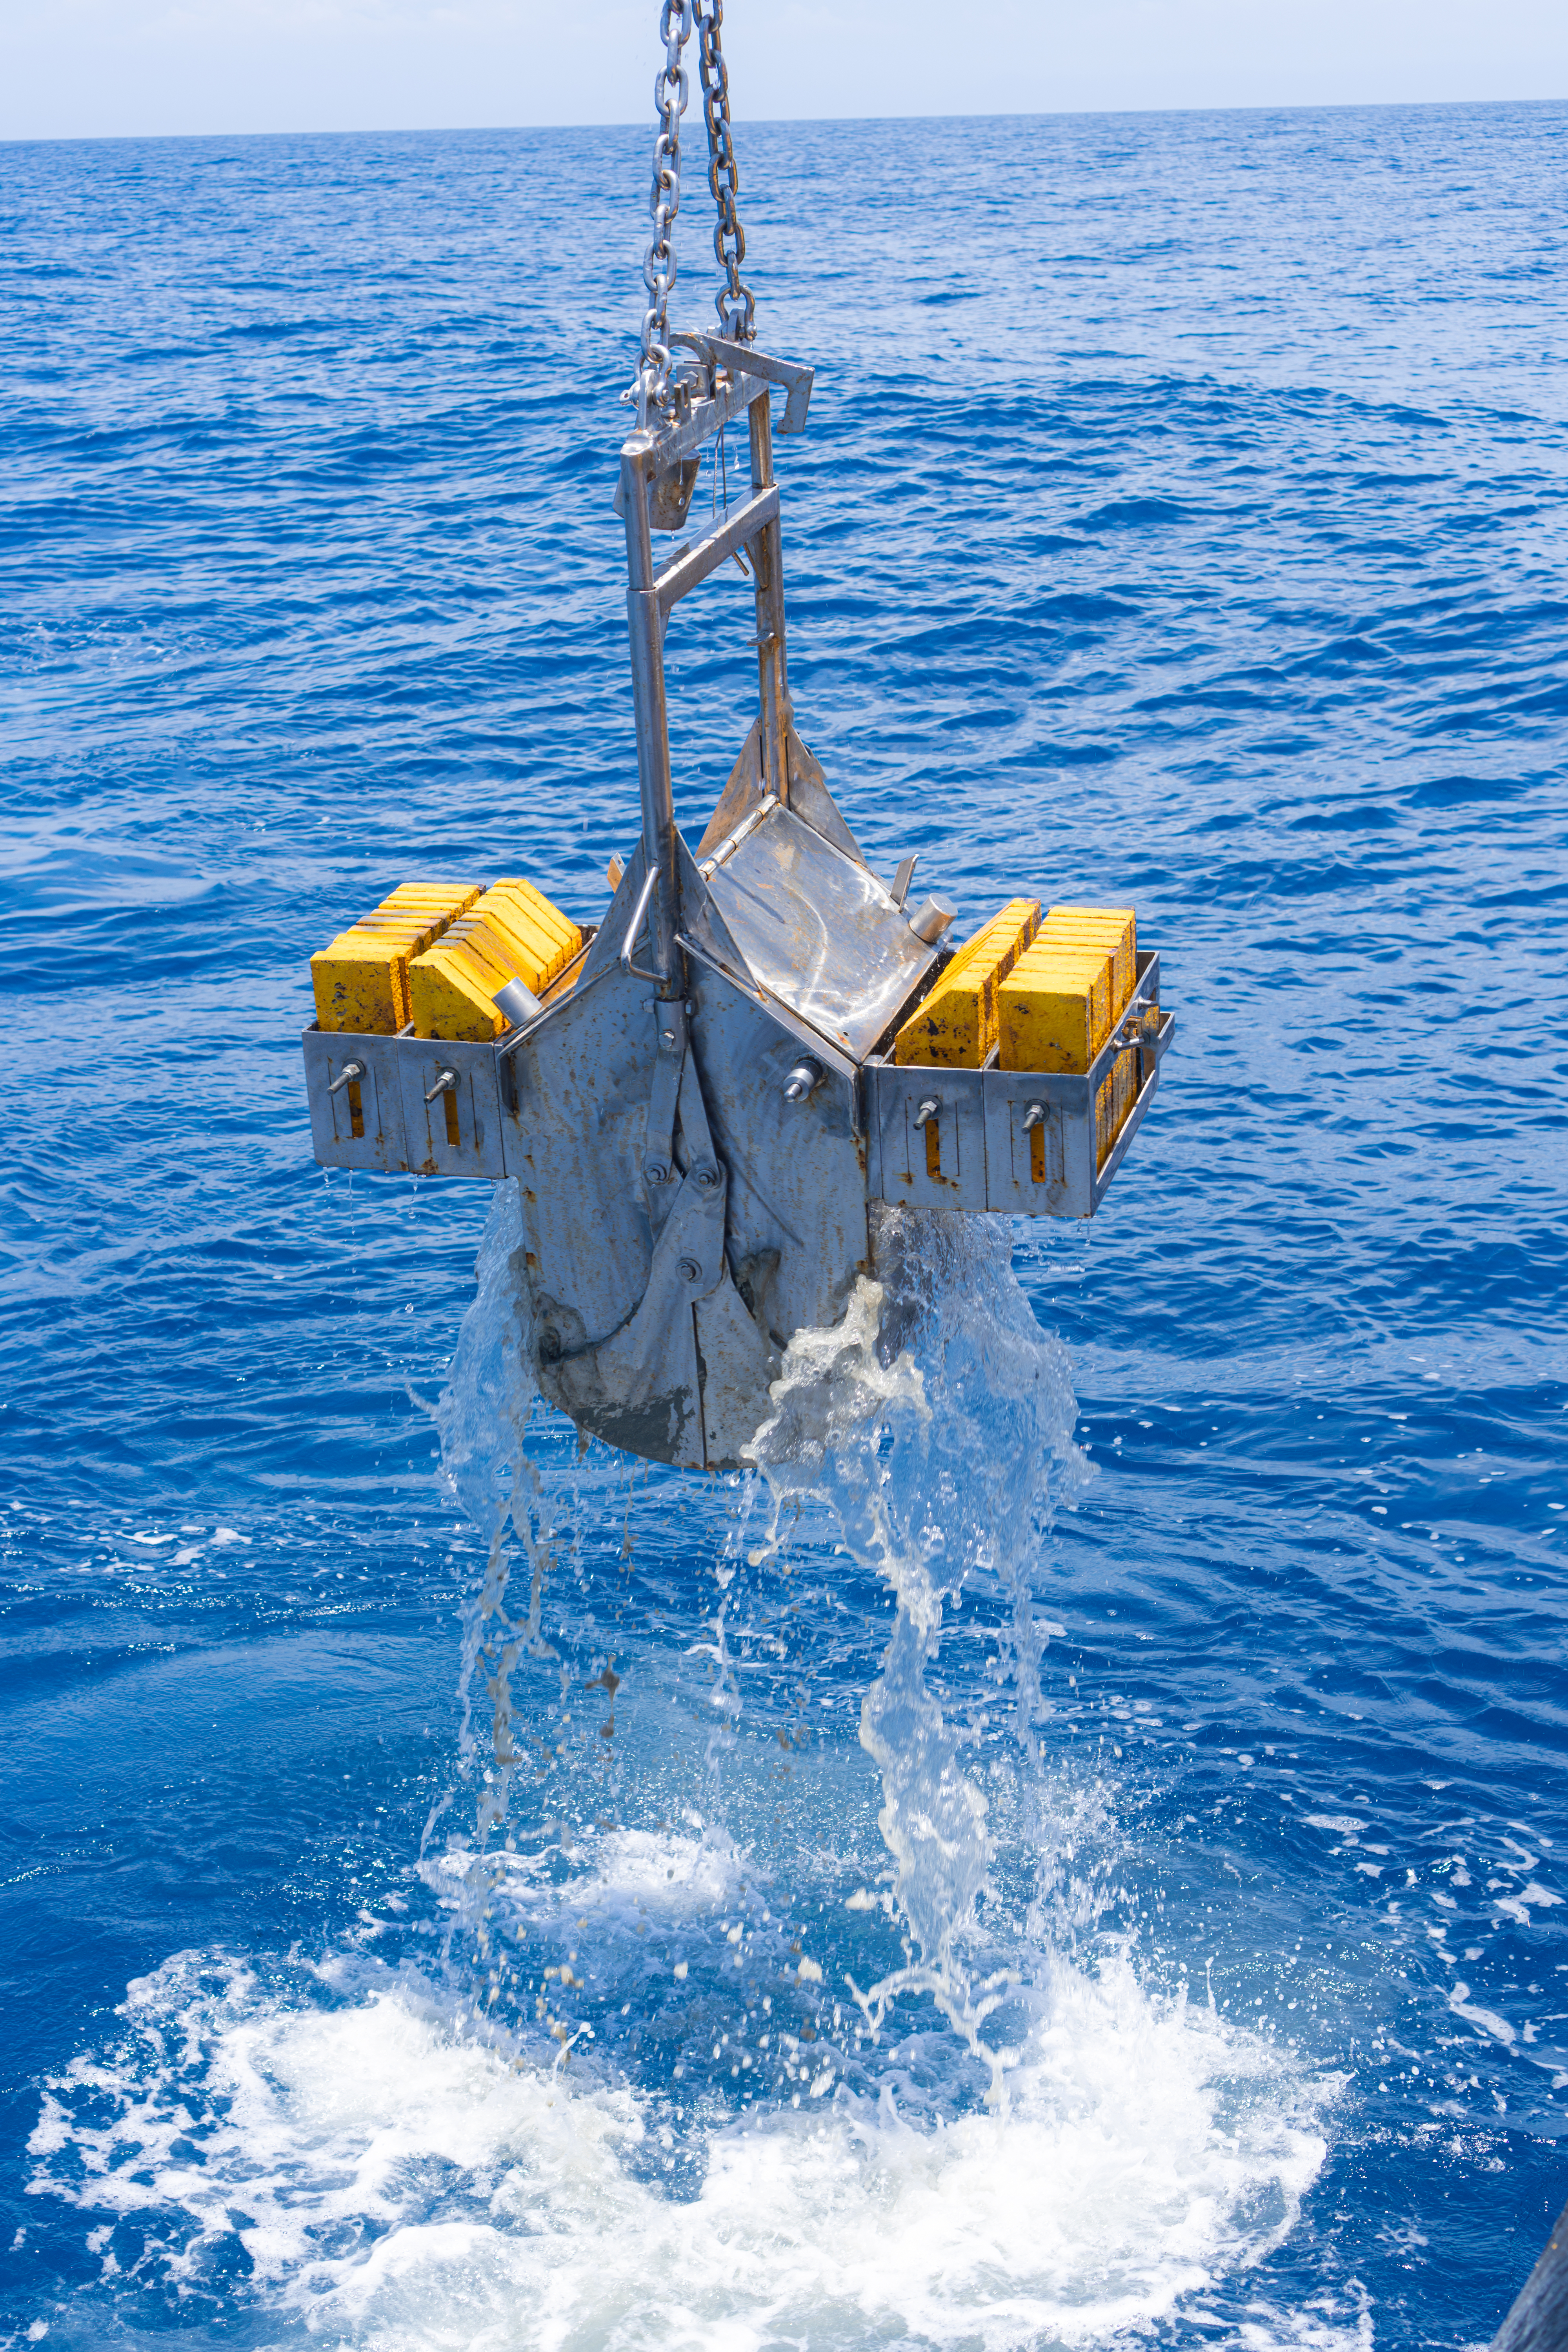 Box Corer at work - Precision sampling of deep-sea benthic organisms